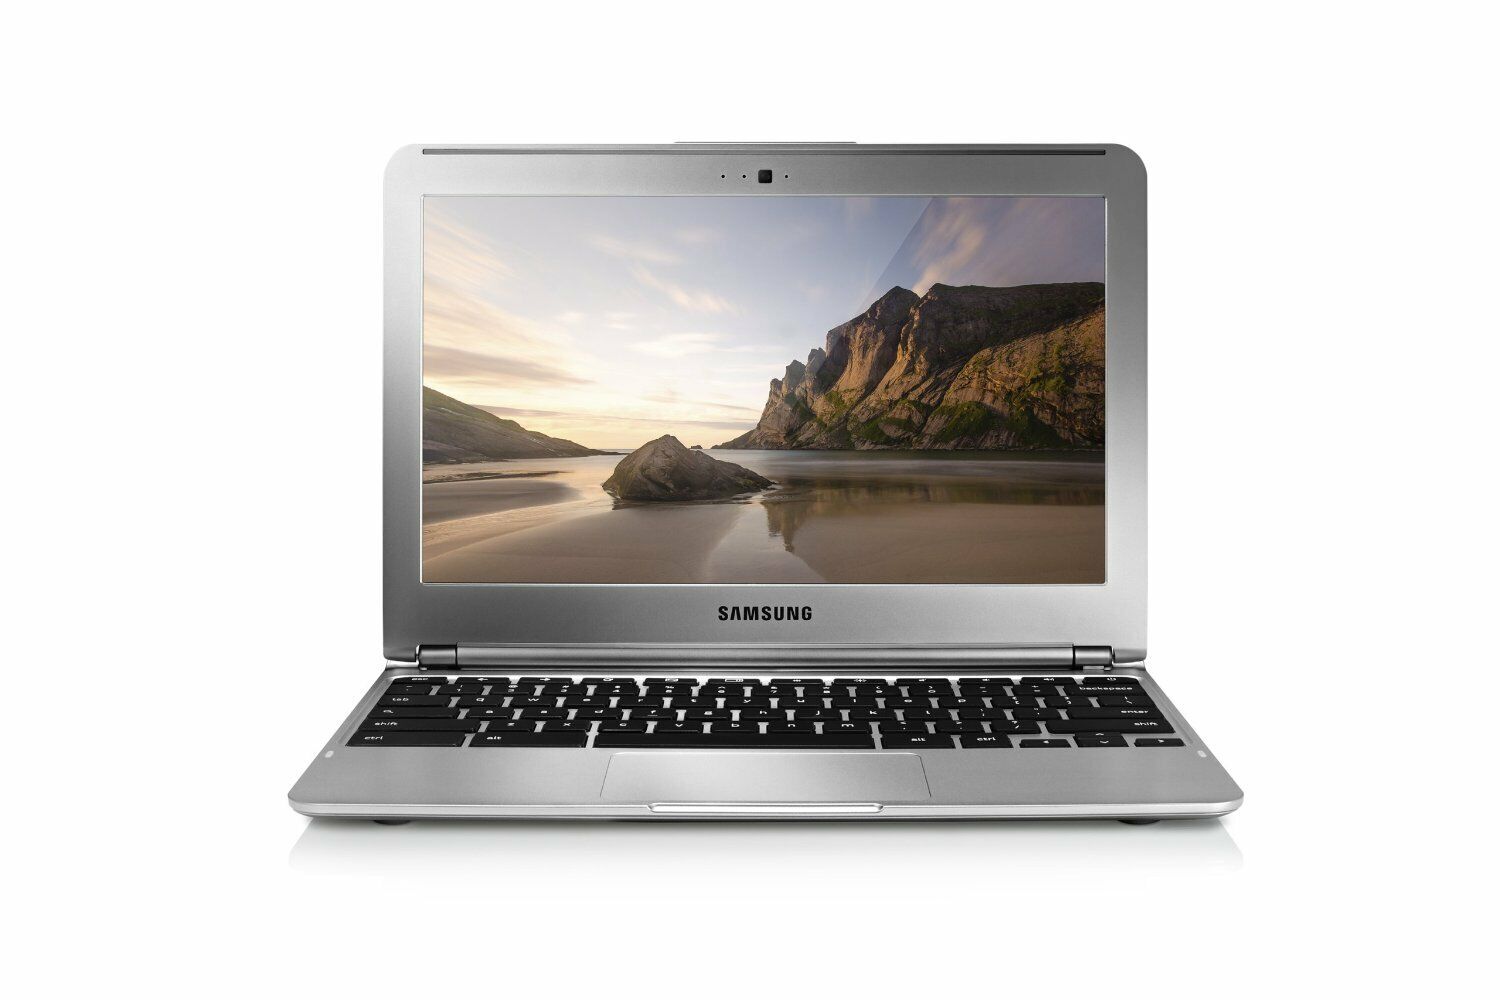 Samsung XE303 C12 Chromebook 11.6 1.7GHz, 2GB Ram, 16GB SSD, working condition